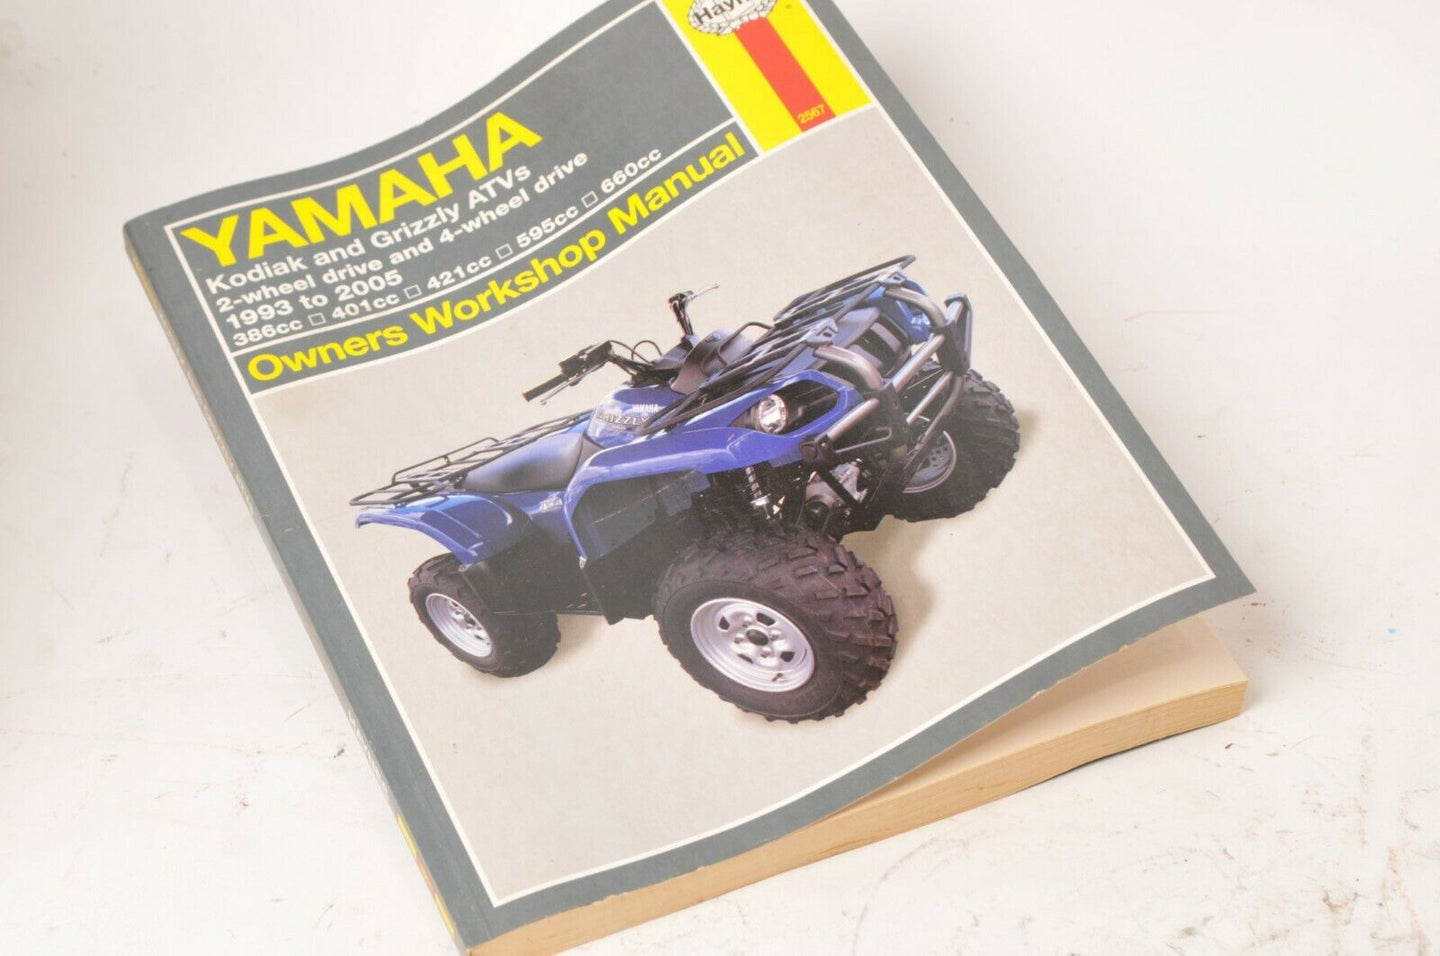 Haynes Owners Workshop Manual: Yamaha Grizzly Kodiak 400-660 1993